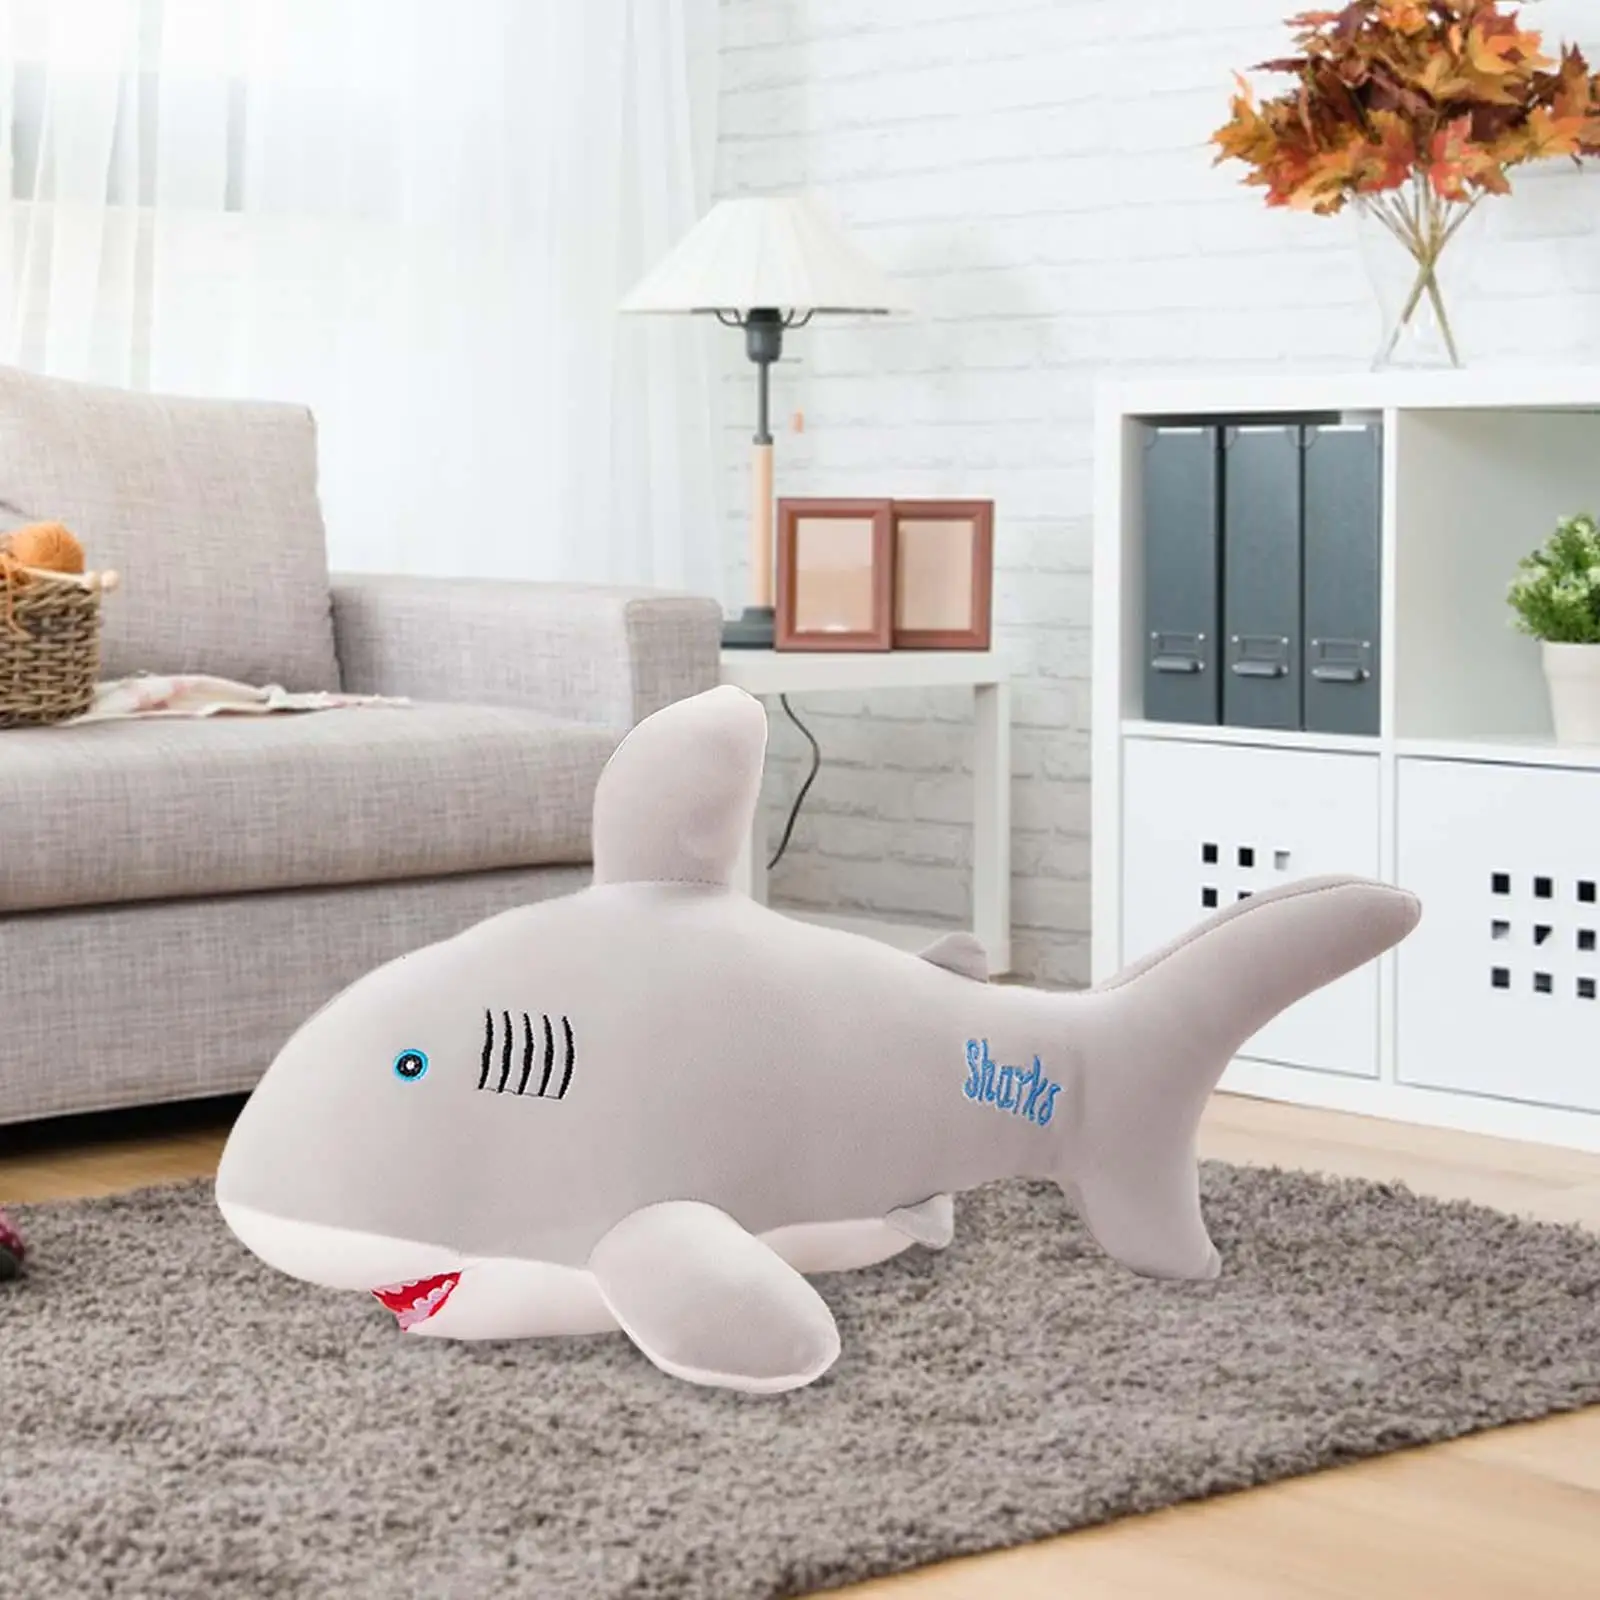 Cute Shark Plush Toys Ornament Sleeping Hugging Pillows for Halloween Sofa